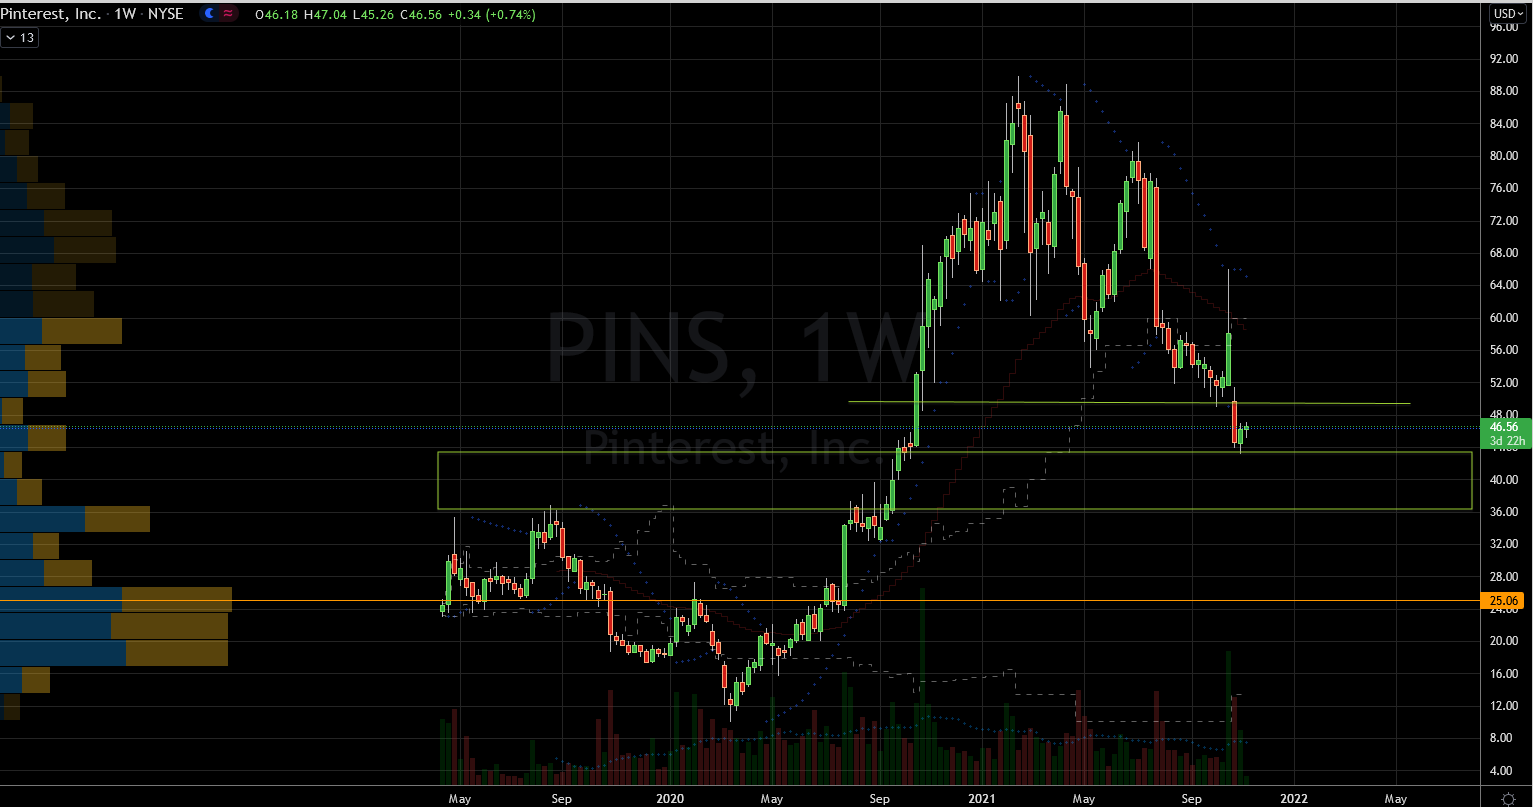 Pinterest (PINS) Stock Chart Showing Pivotal Levels